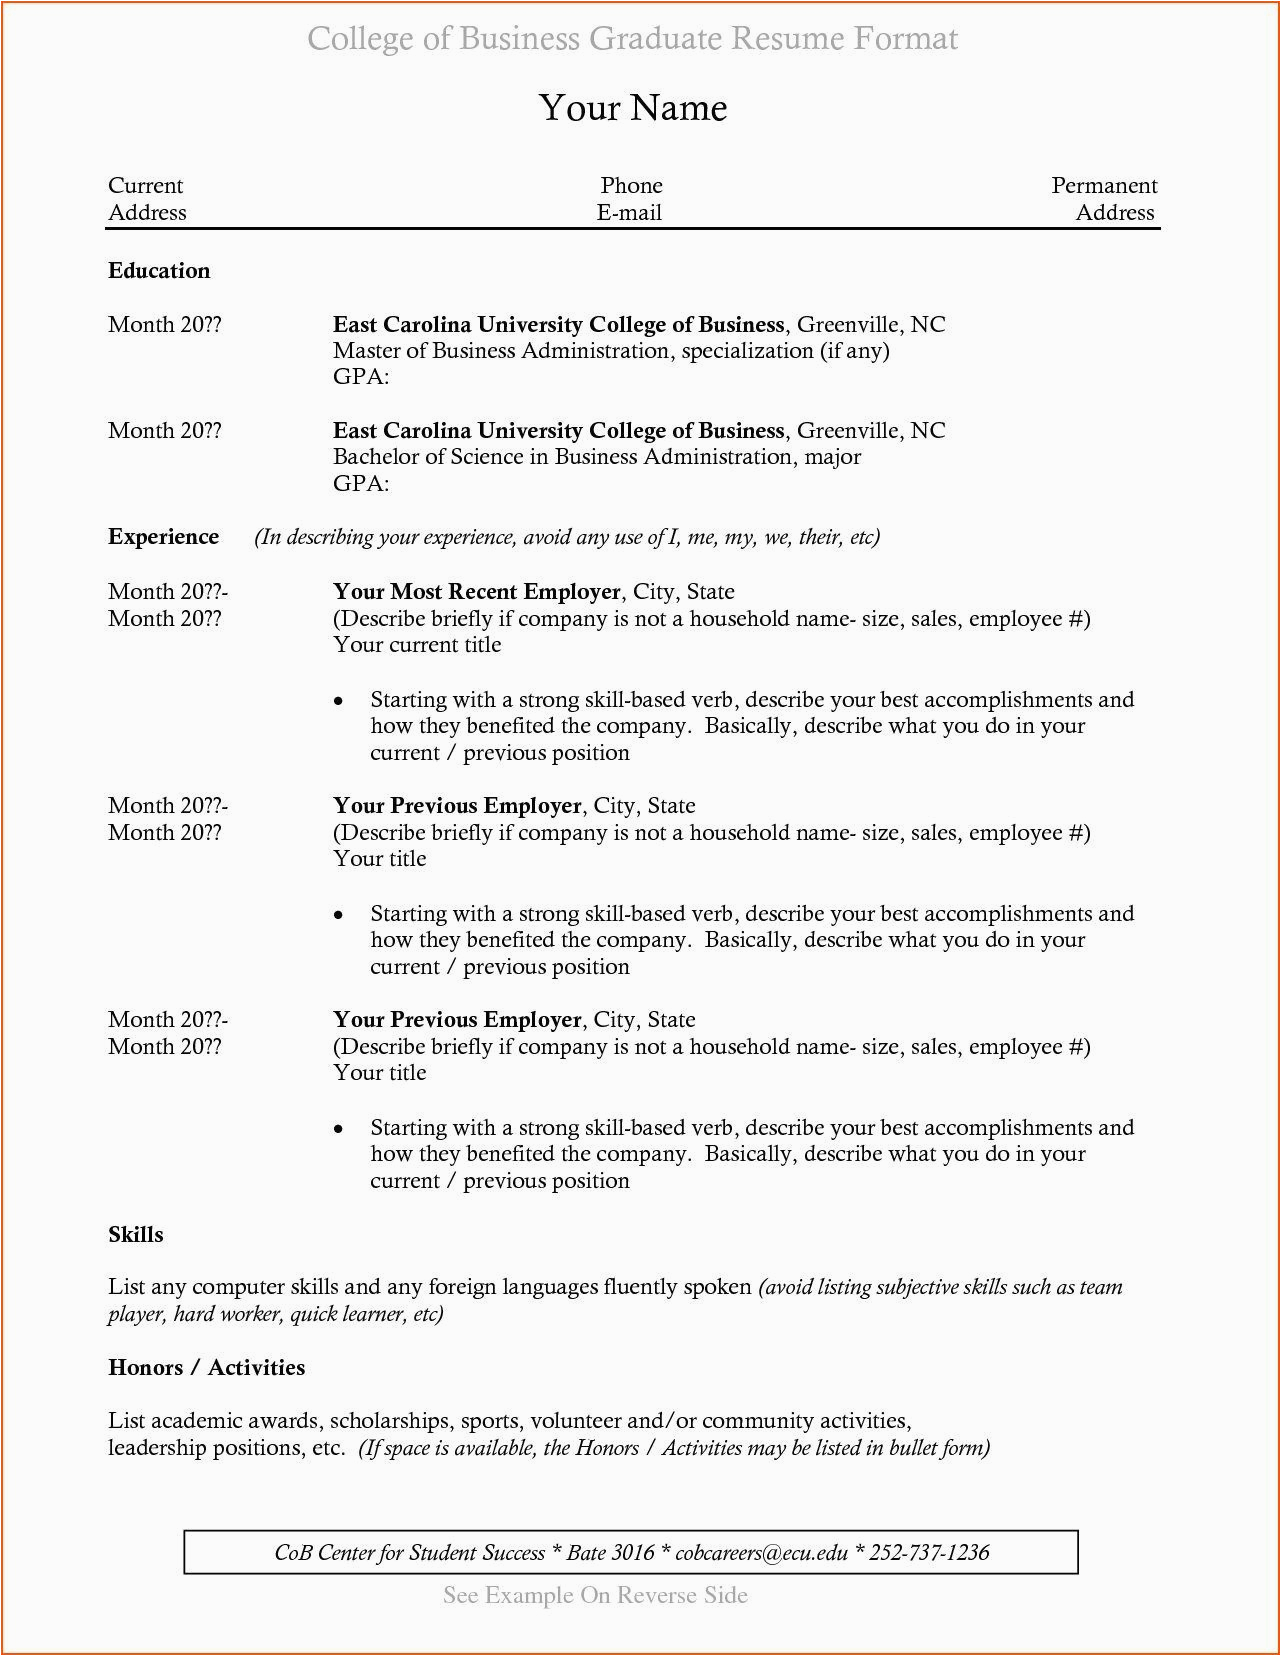 Sample Resume for Fresh College Graduate Resume Templates Recent College Graduate